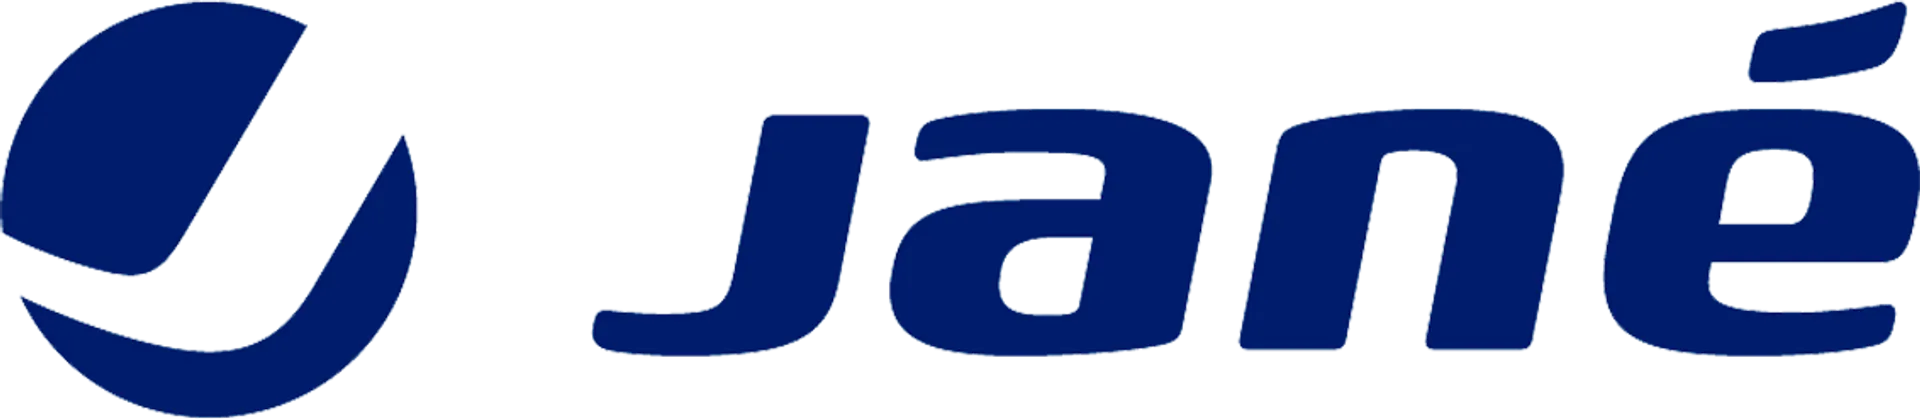 JANE logo